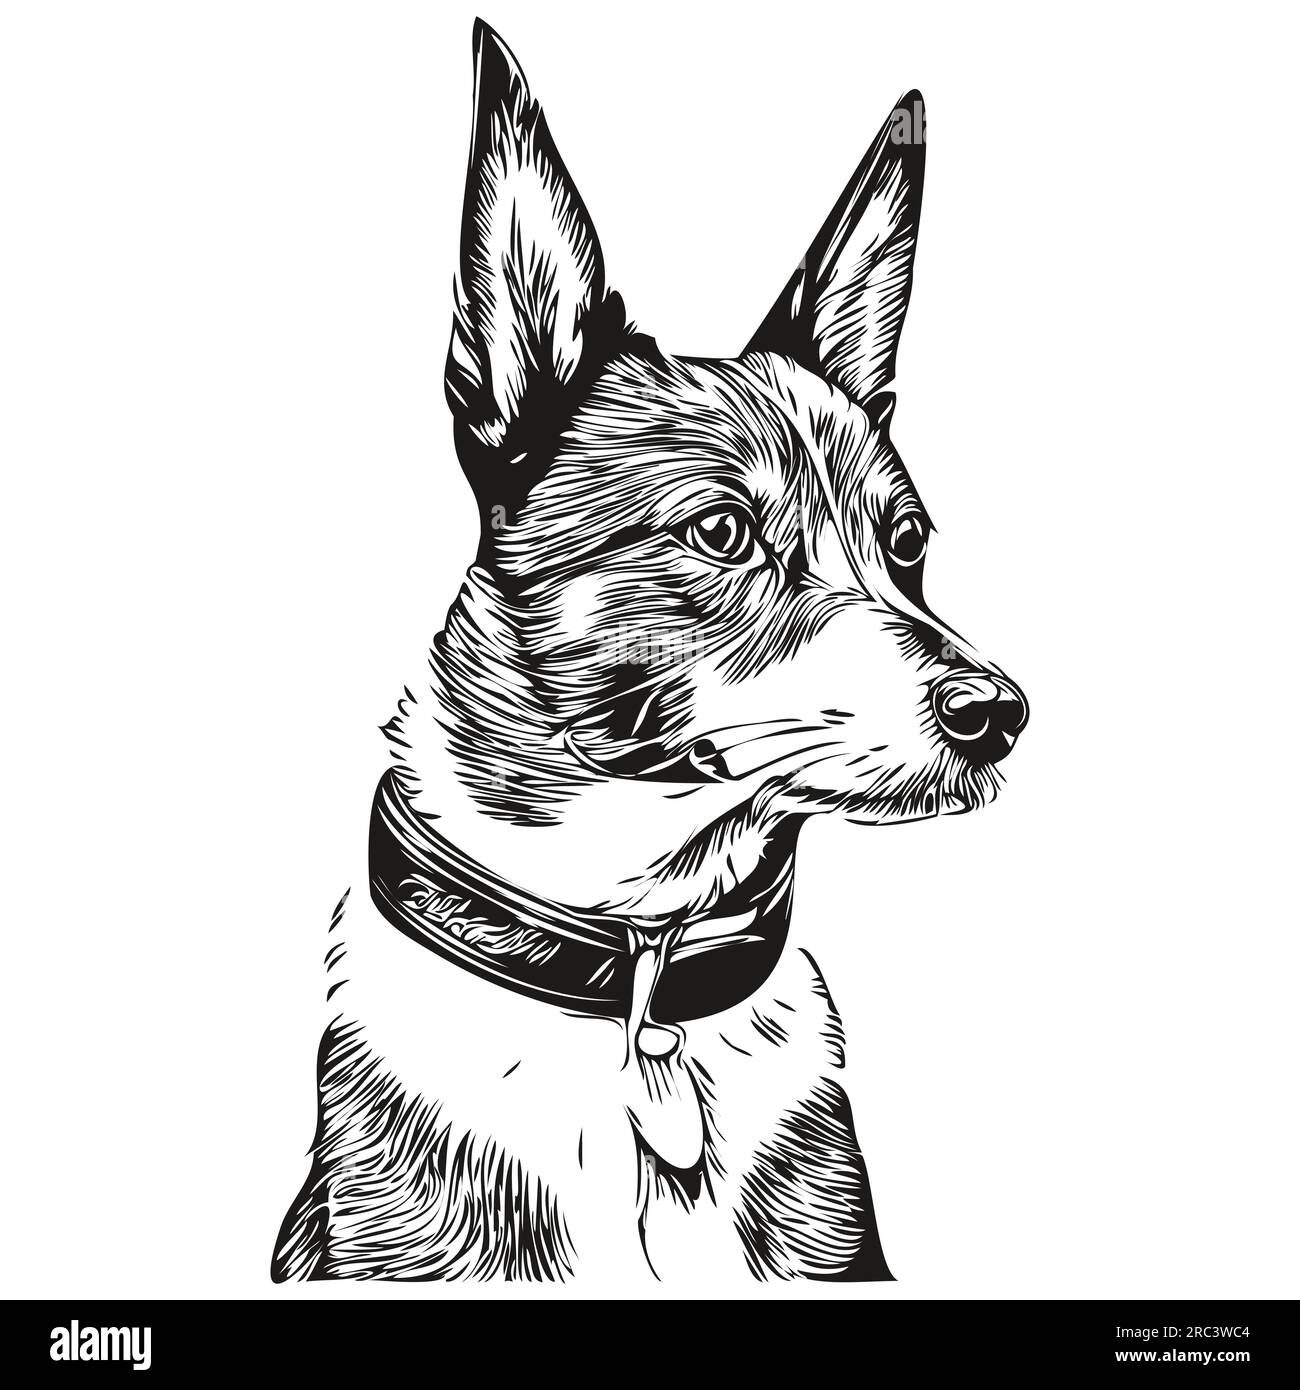 Basenji dog pet sketch illustration, black and white engraving vector ...